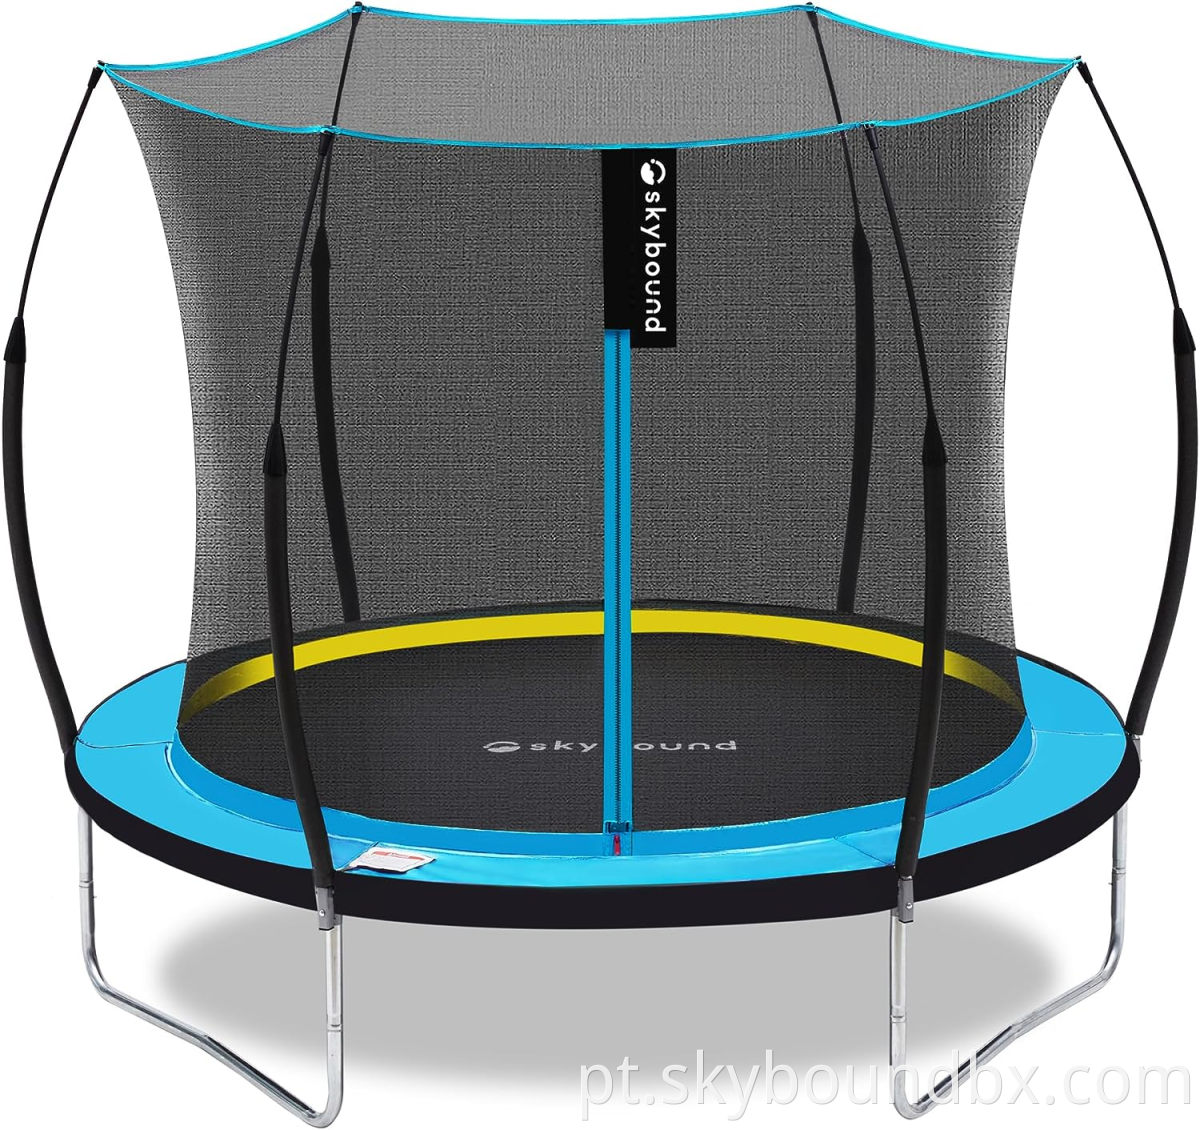 my 1st trampoline